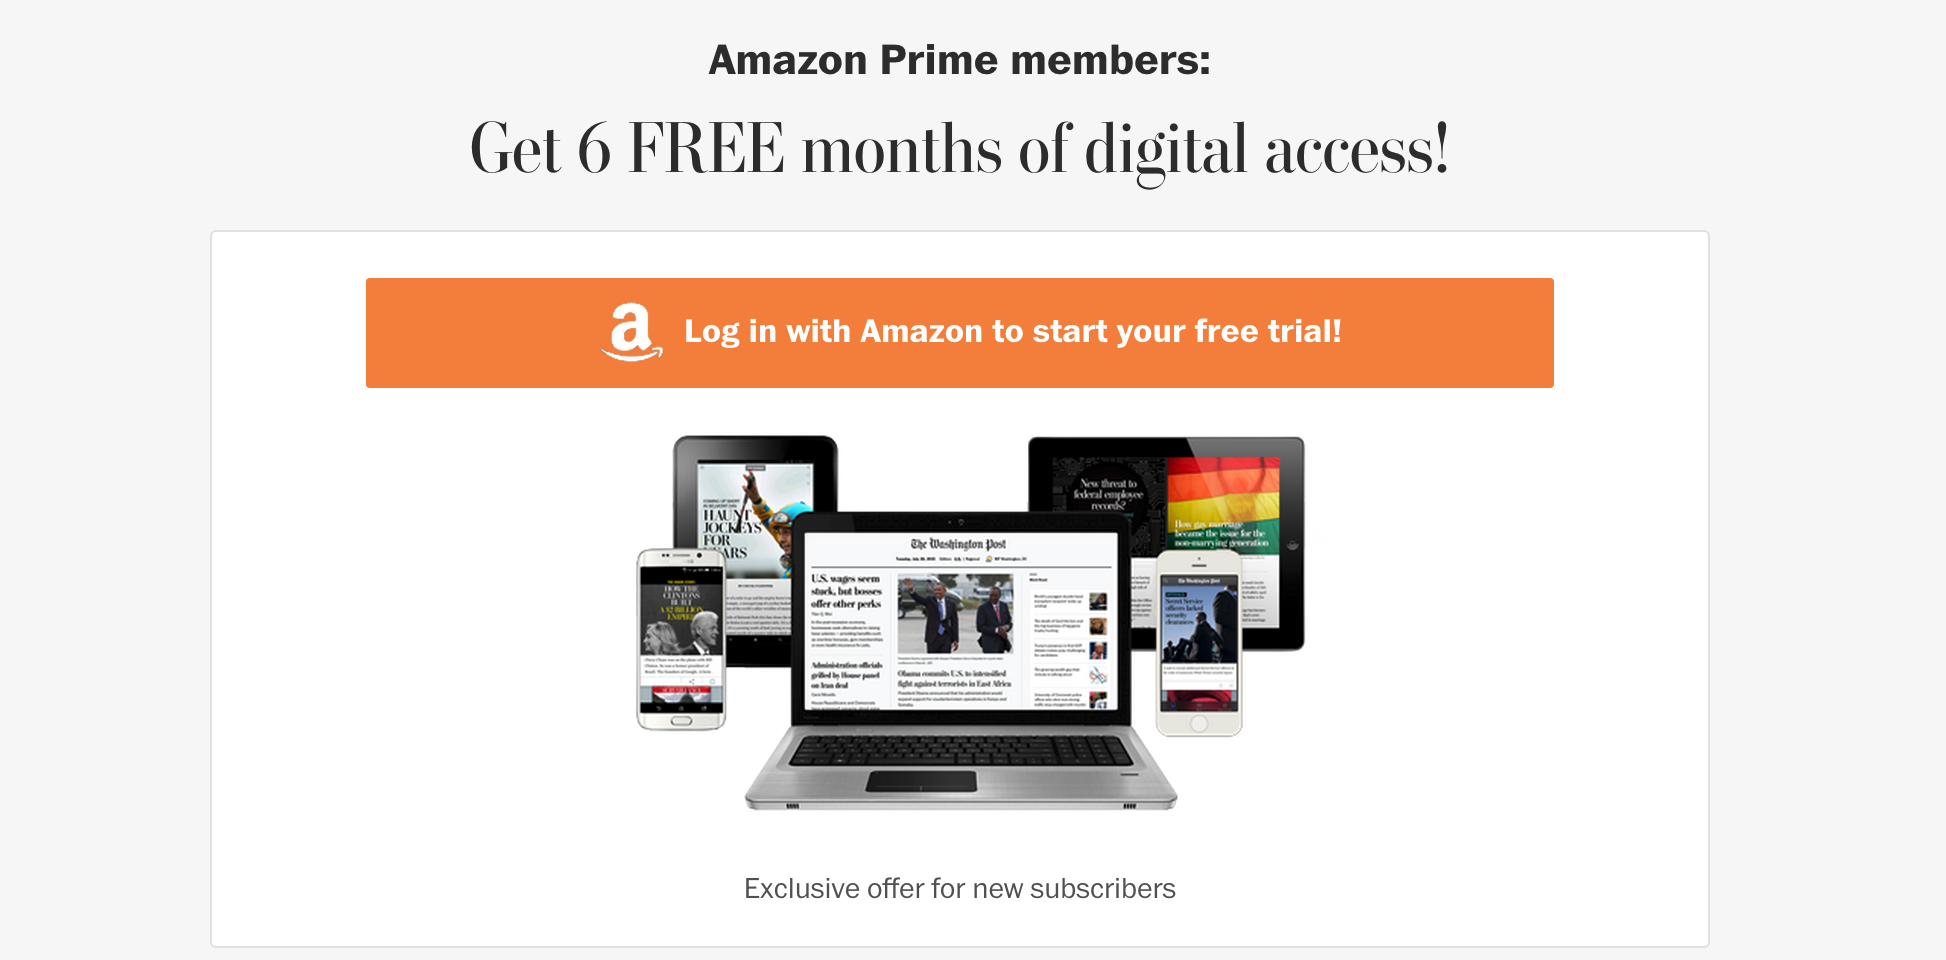 Amazon adds 3 valuable benefits to Prime including free Washington Post